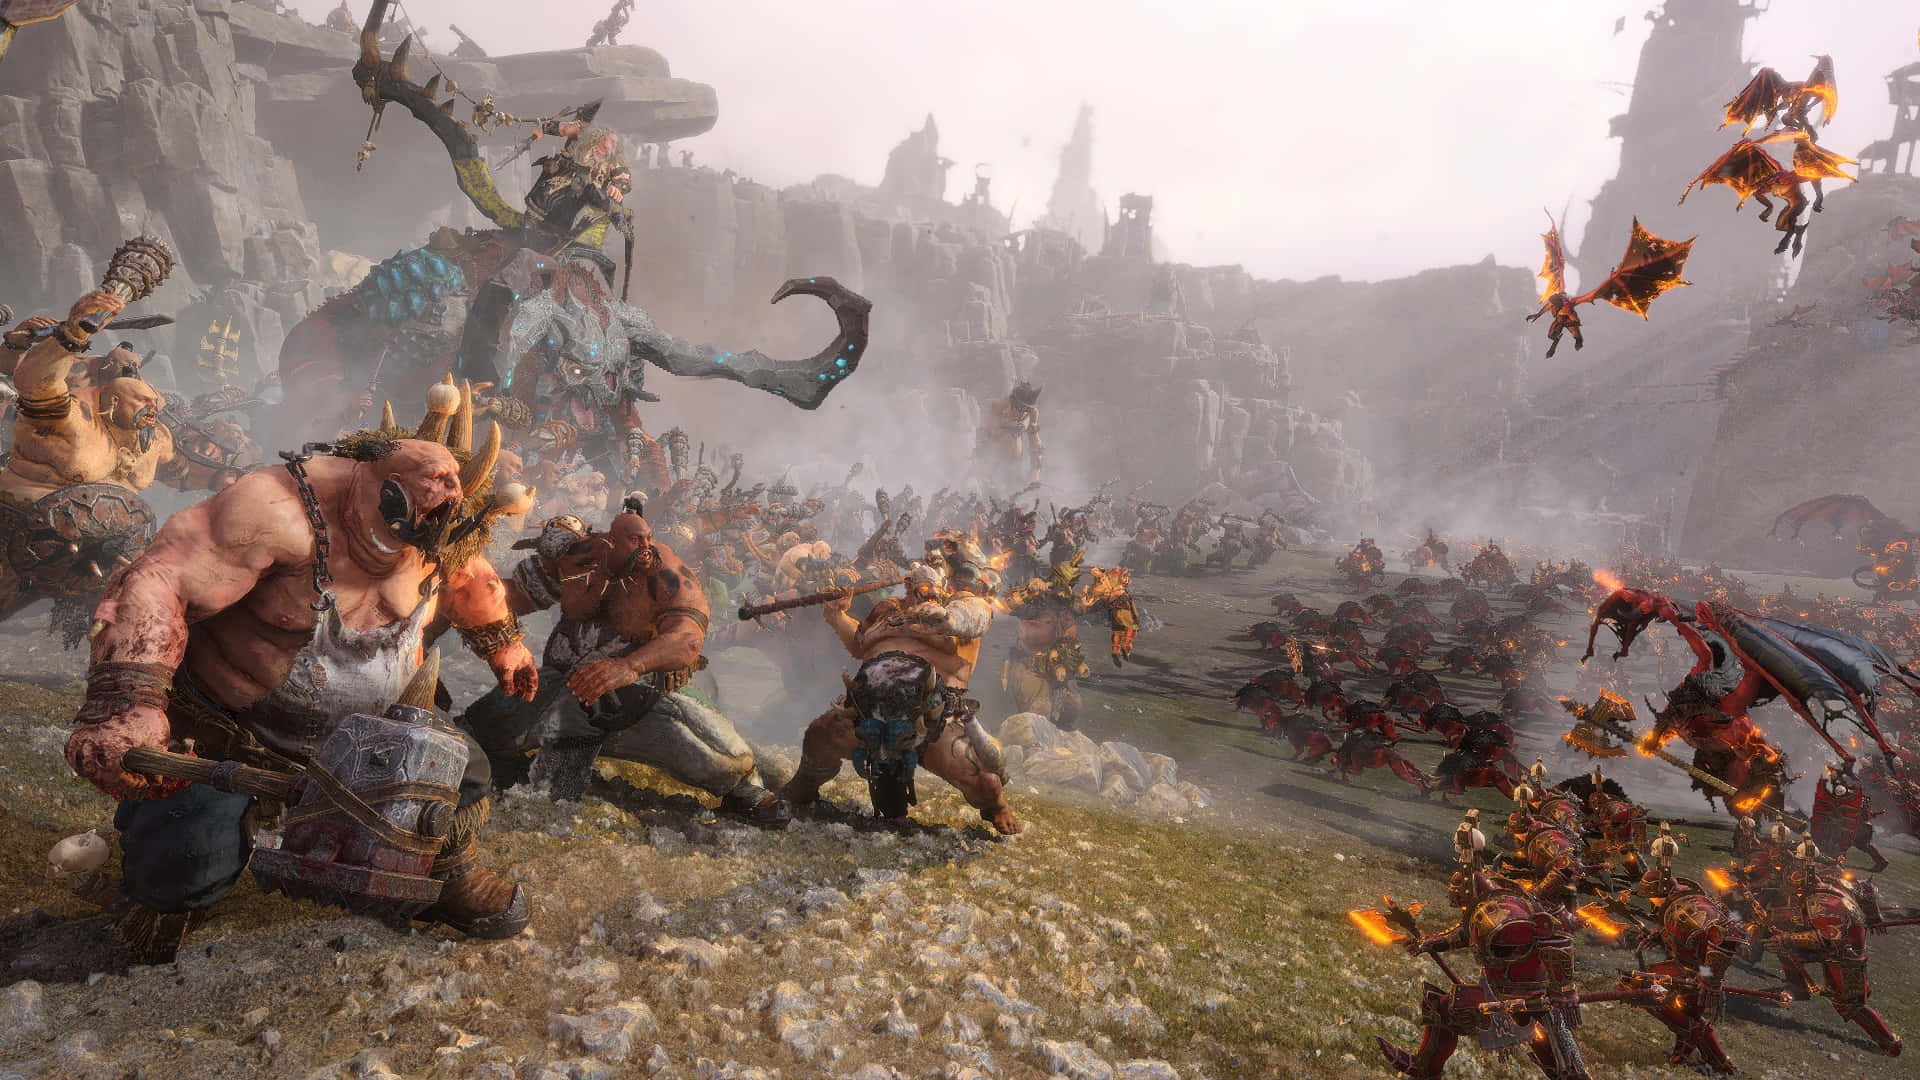 Epic battles unfold in Total War: Warhammer